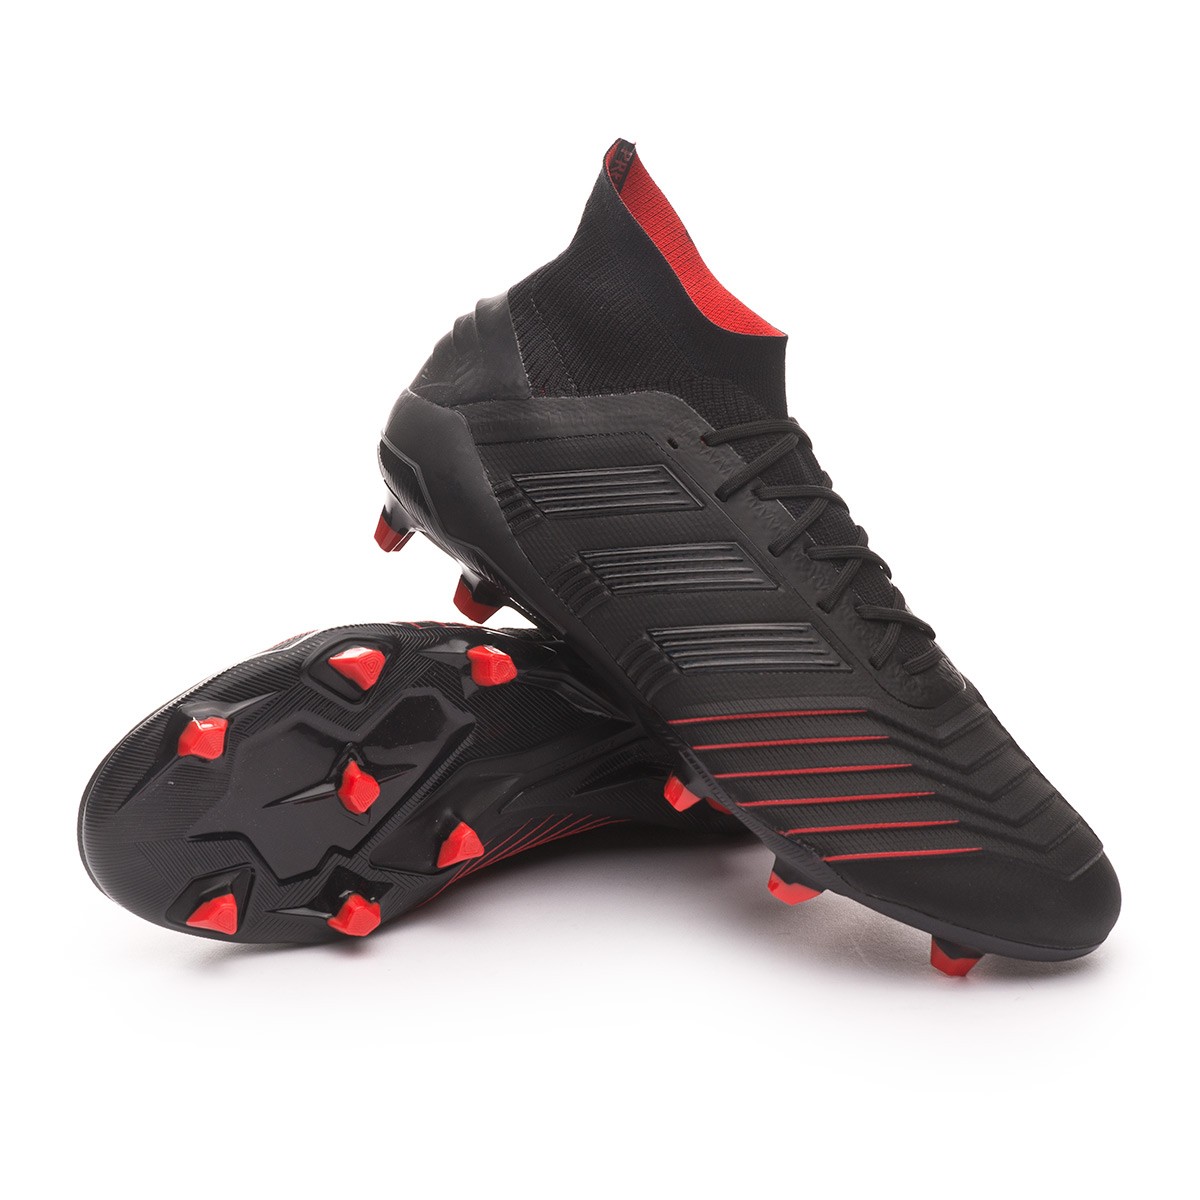 Football Boots adidas Predator 19.1 FG 